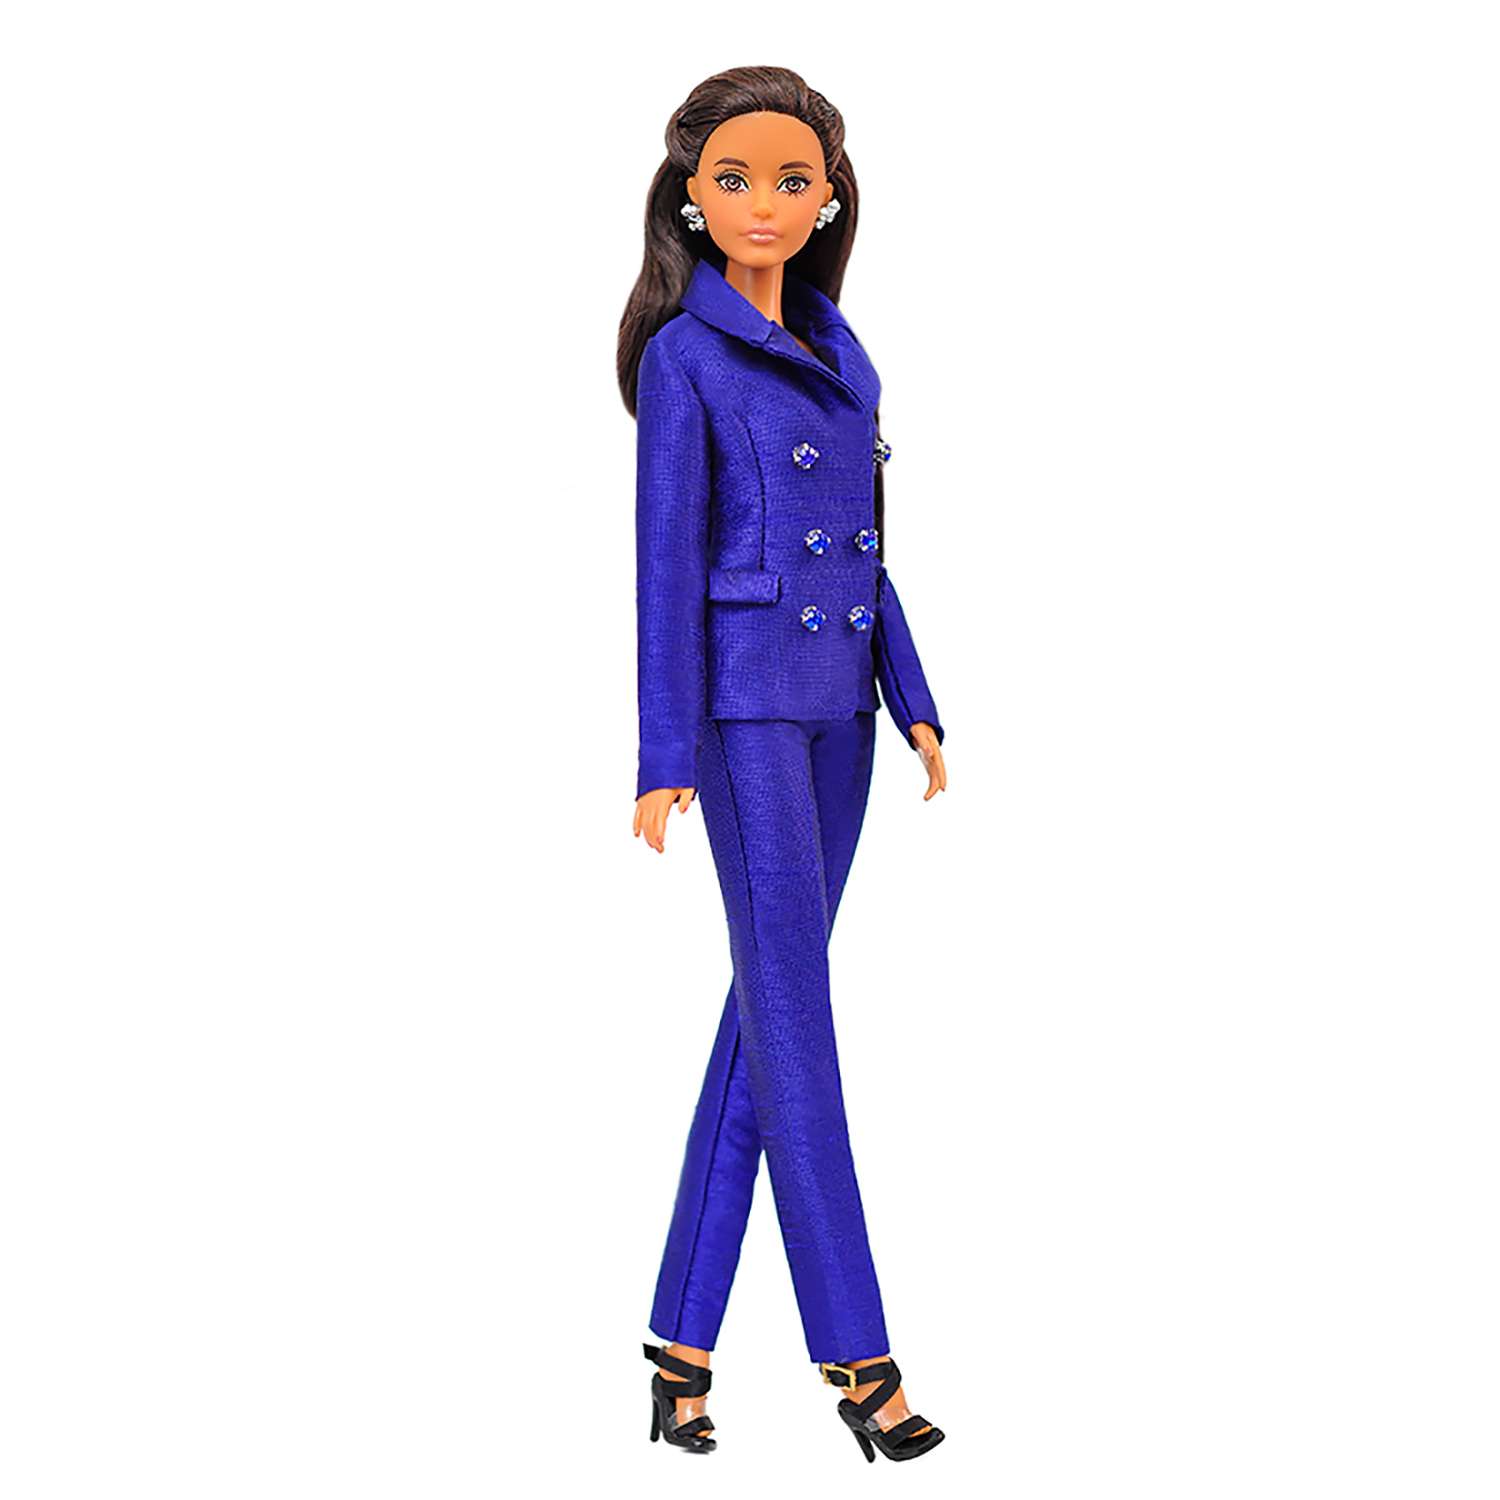 Шелковый брючный костюм Эленприв Синий для куклы 29 см типа Барби FA-011-01 - фото 1